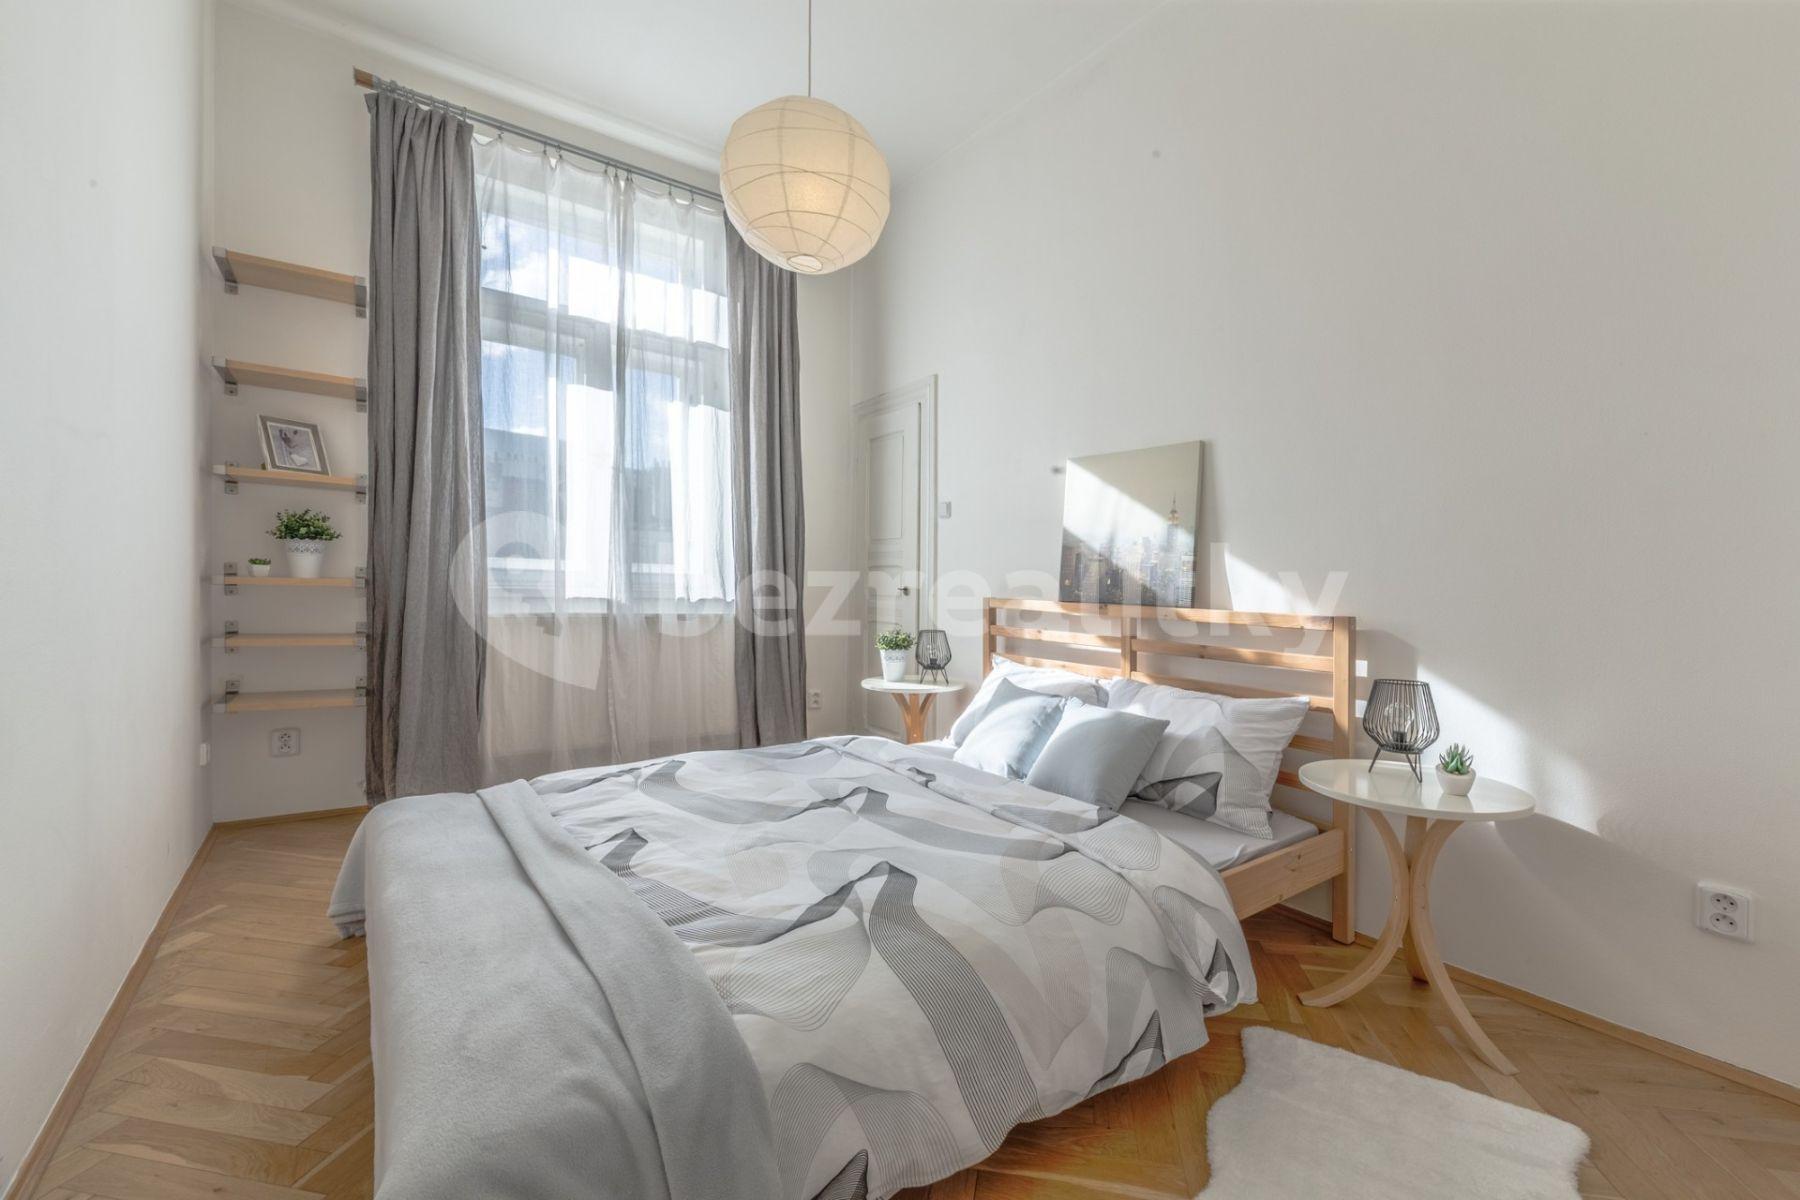 1 bedroom with open-plan kitchen flat for sale, 36 m², Sekaninova, Prague, Prague